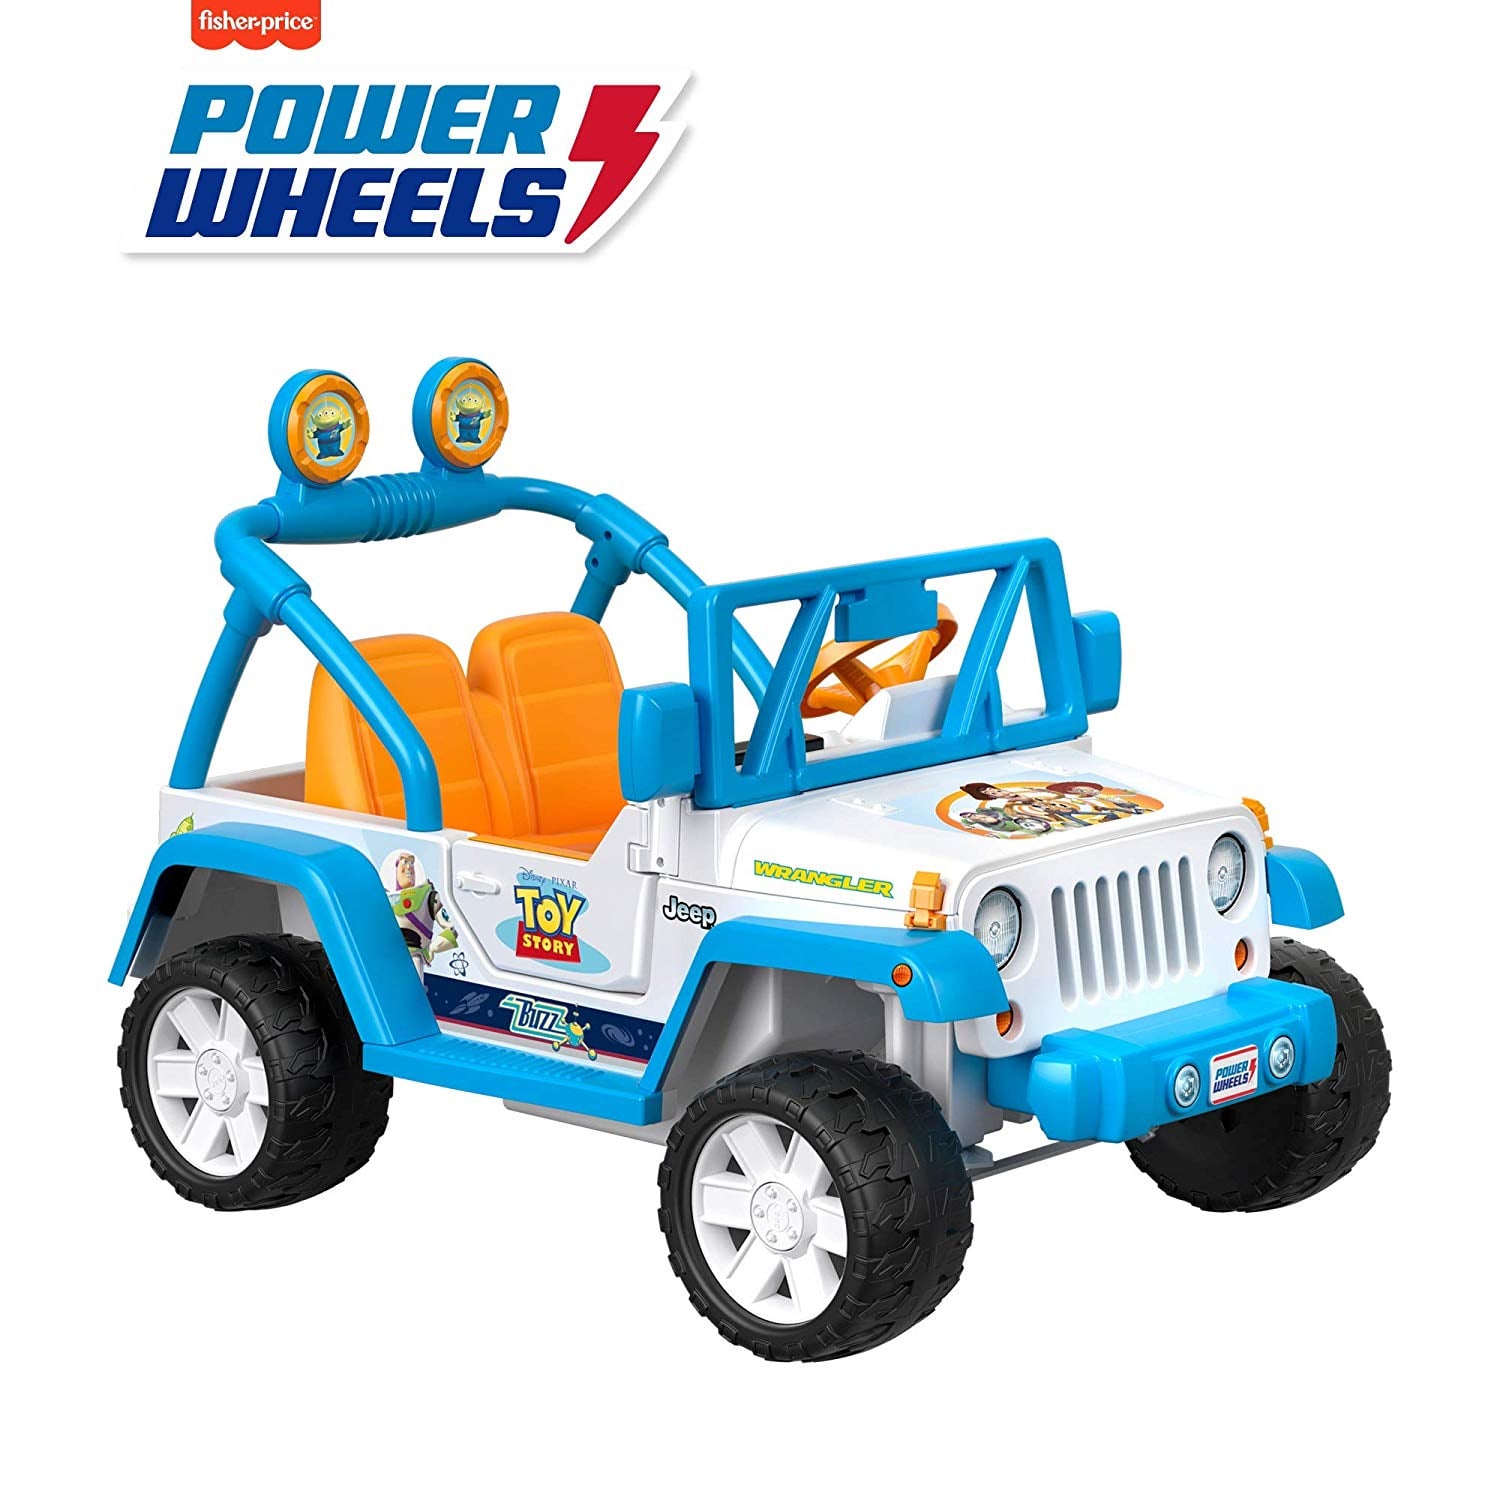 top power wheels 2019